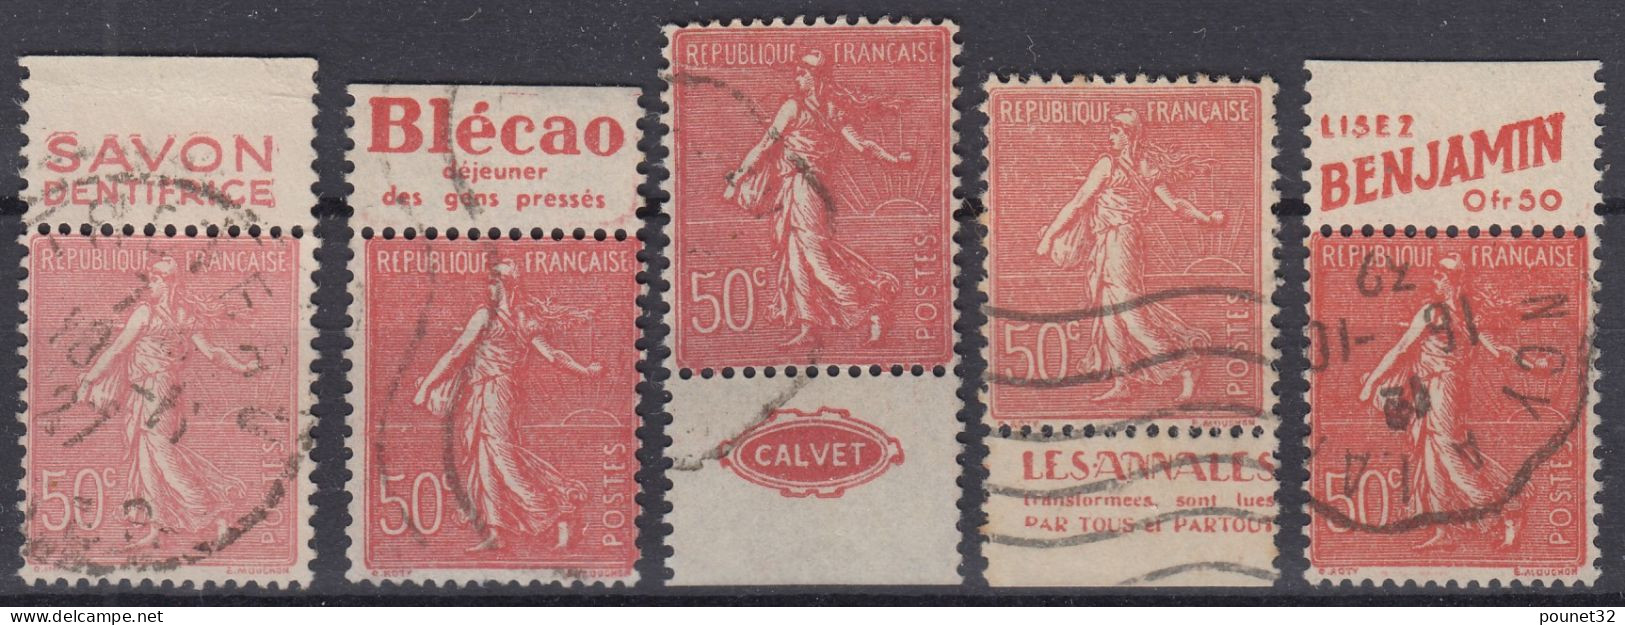 FRANCE SEMEUSE N° 199 LOT DE VIGNETTES PUB CALVET SAVON BLECAO ANNALES BENJAMIN - Used Stamps